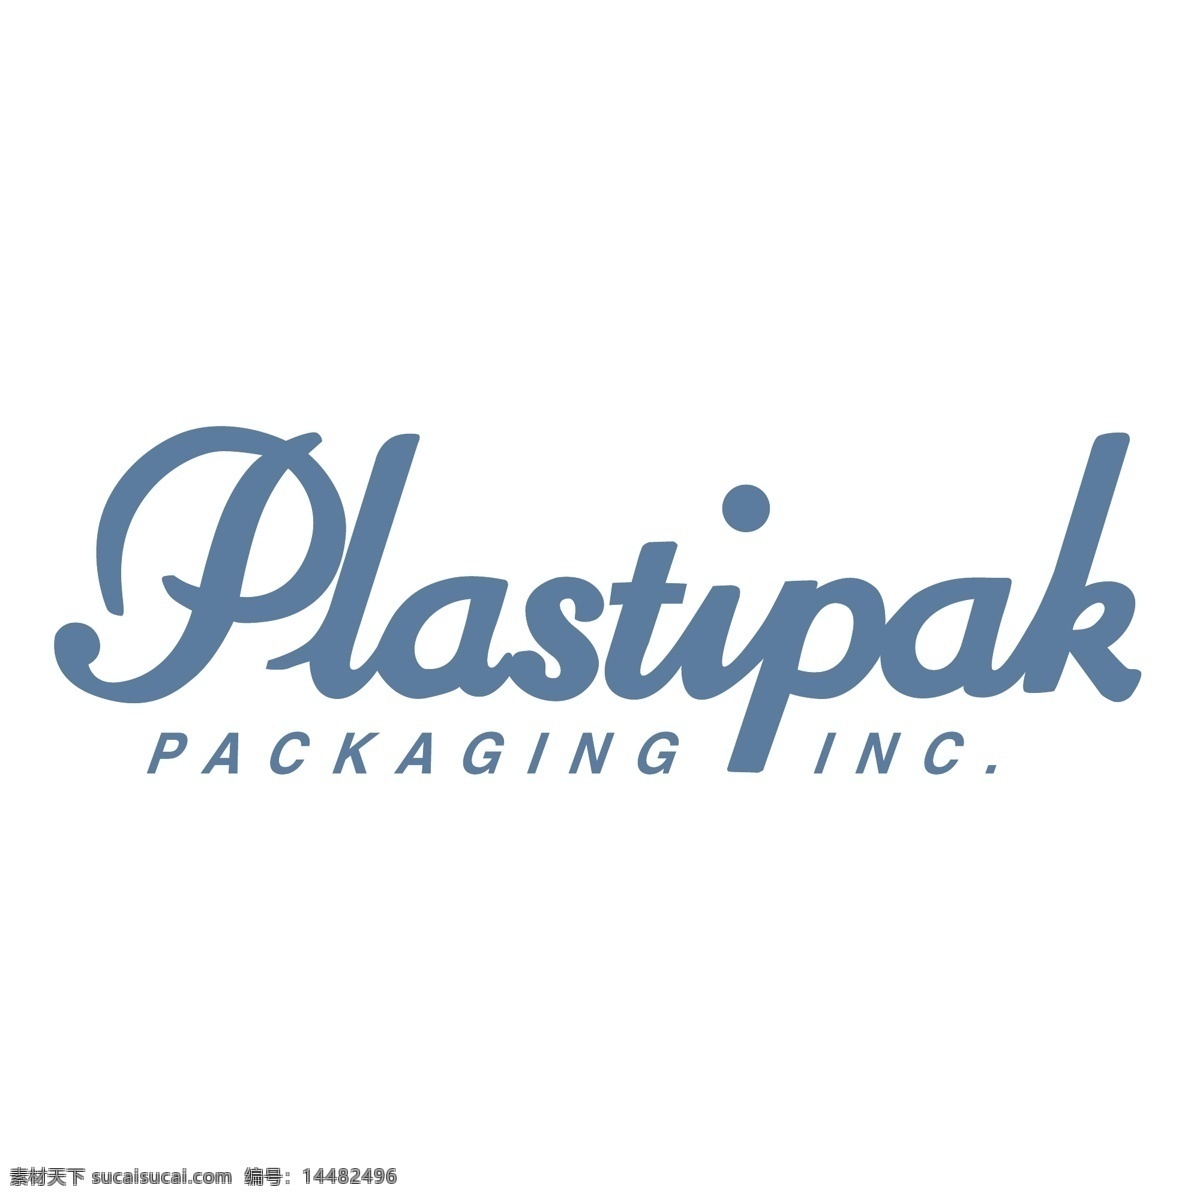 plastipak 公司 包装 包装公司 公司logo 公司标志 公司的矢量 矢量 艺术 有限公司 标识有限公司 标志 免费矢量包装 矢量图 建筑家居